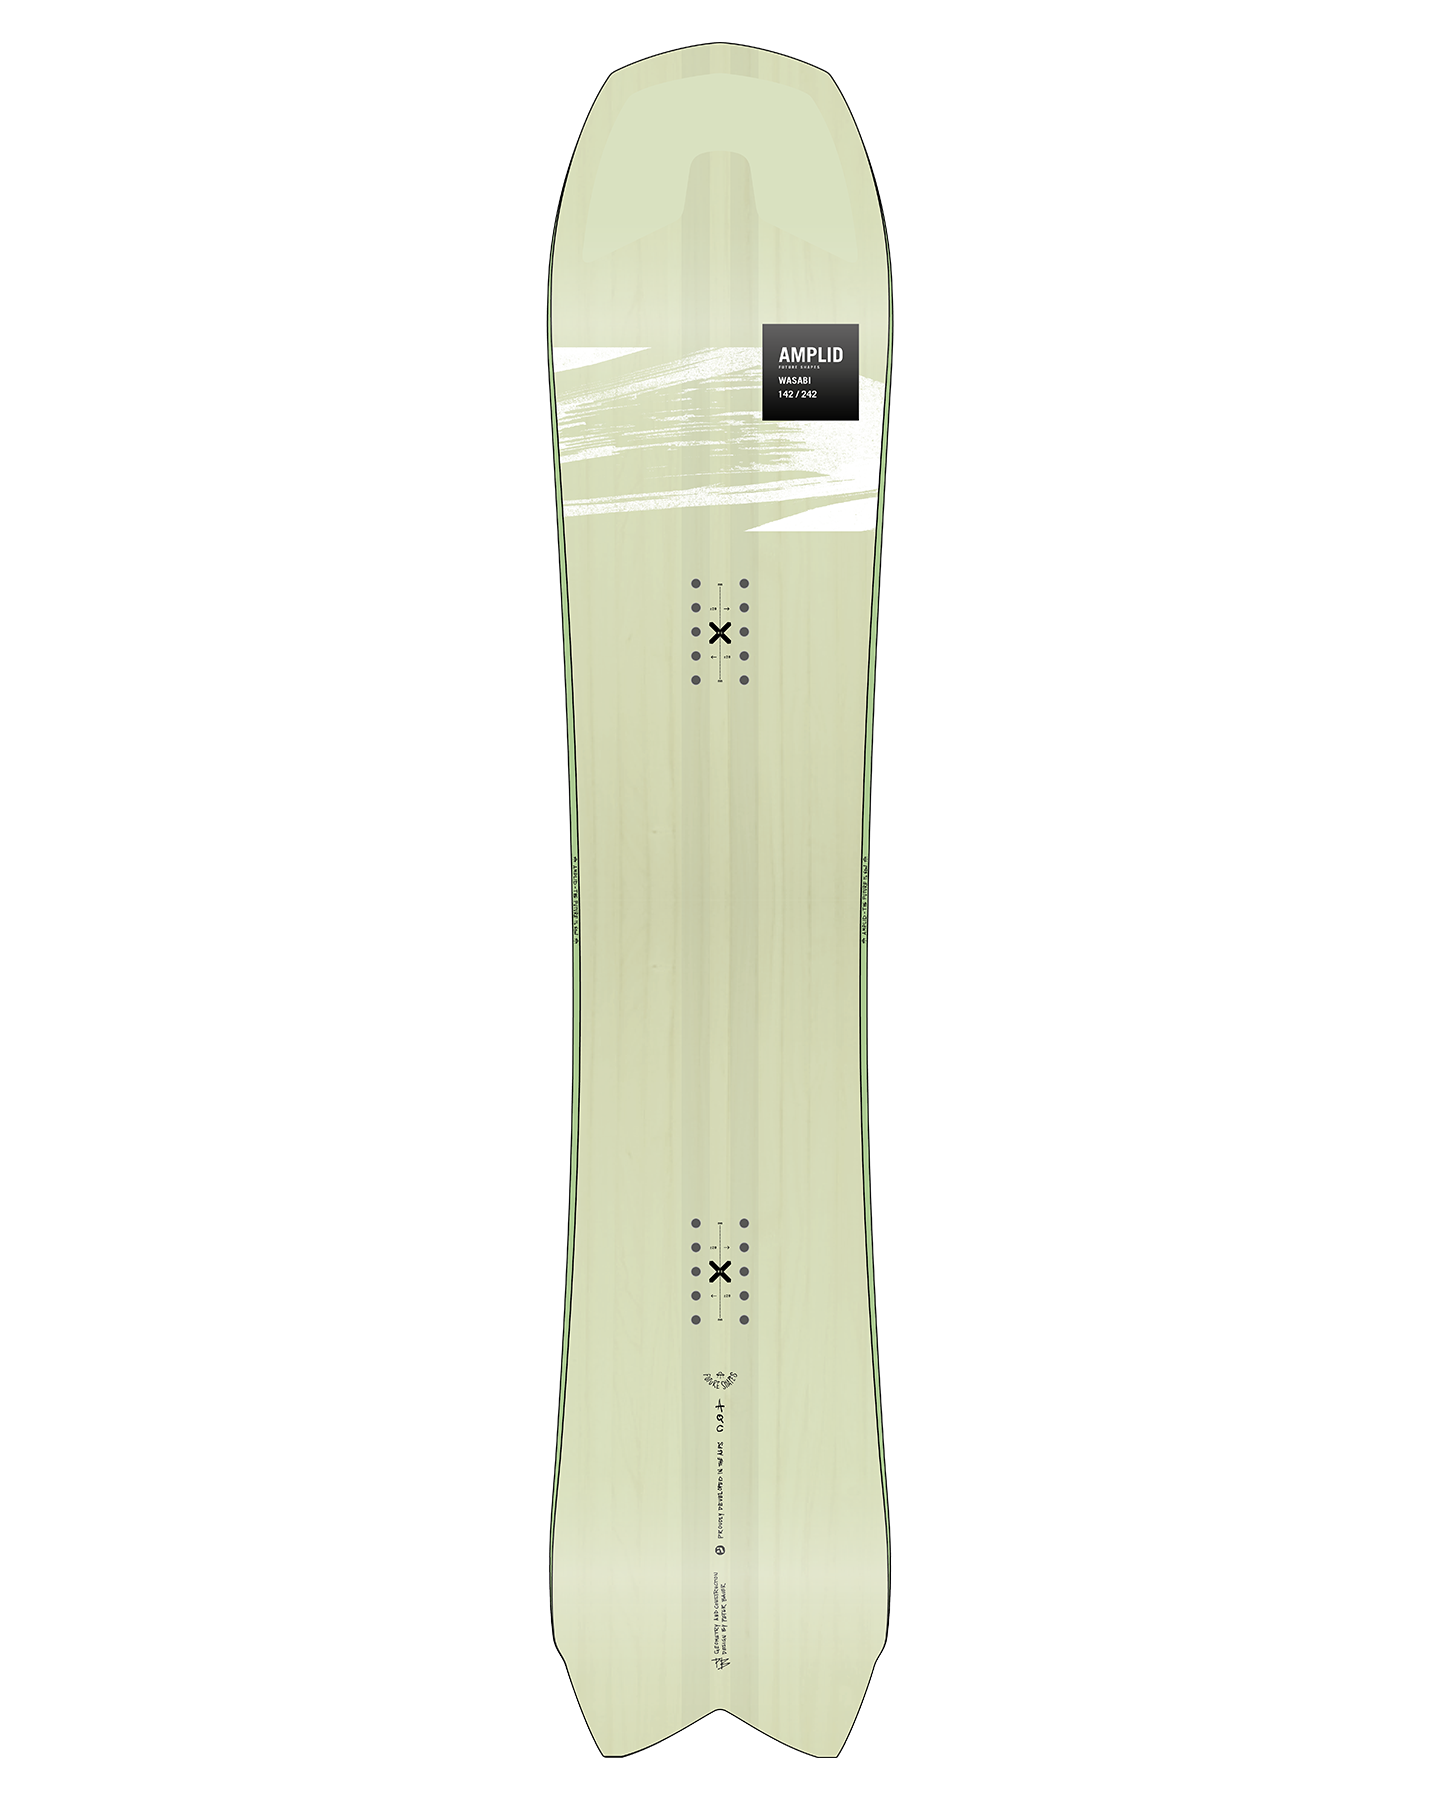 Amplid The Wasabi Snowboard - 2025 Men's Snowboards - SnowSkiersWarehouse